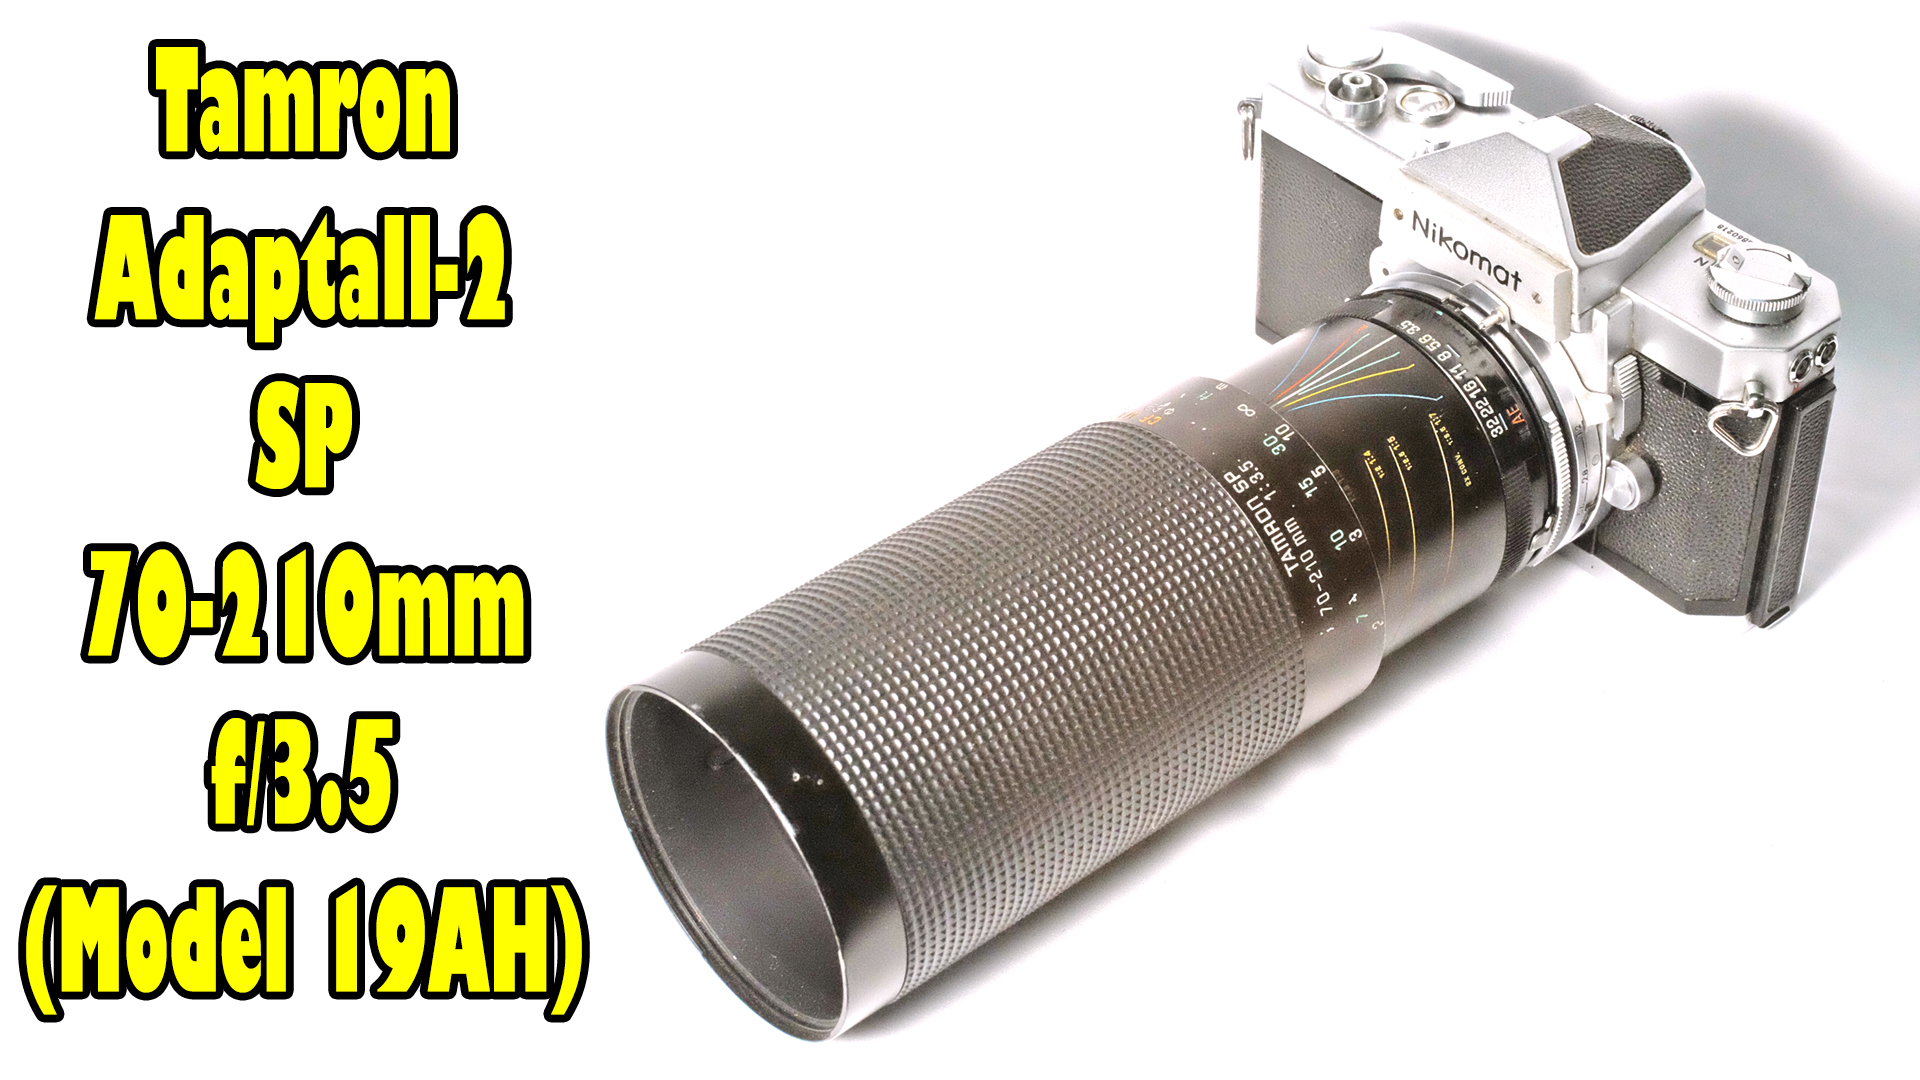 Tamron Adaptall-2 SP 70-210mm f/3.5 MACRO (Model 19AH, 1984-1999)